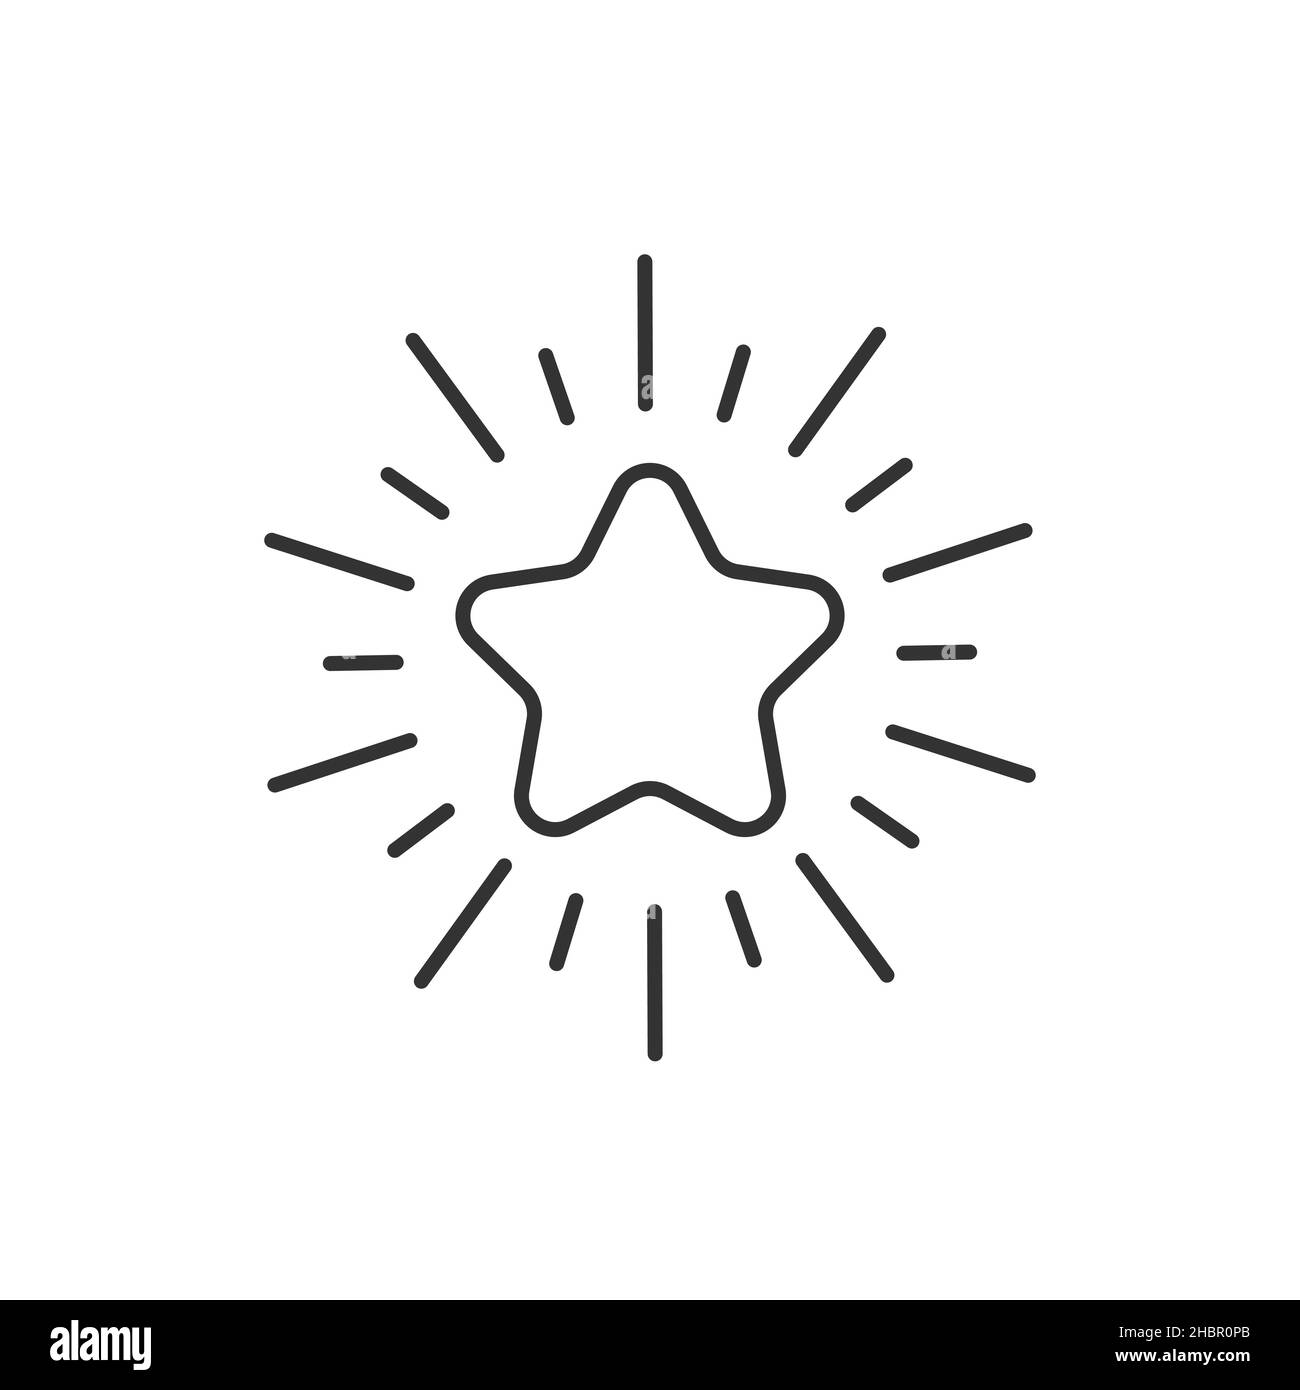 Shiny star line icon. Bonus points. Discount program symbol. Quality design element. Stock vector illustration isolated Stock Vector